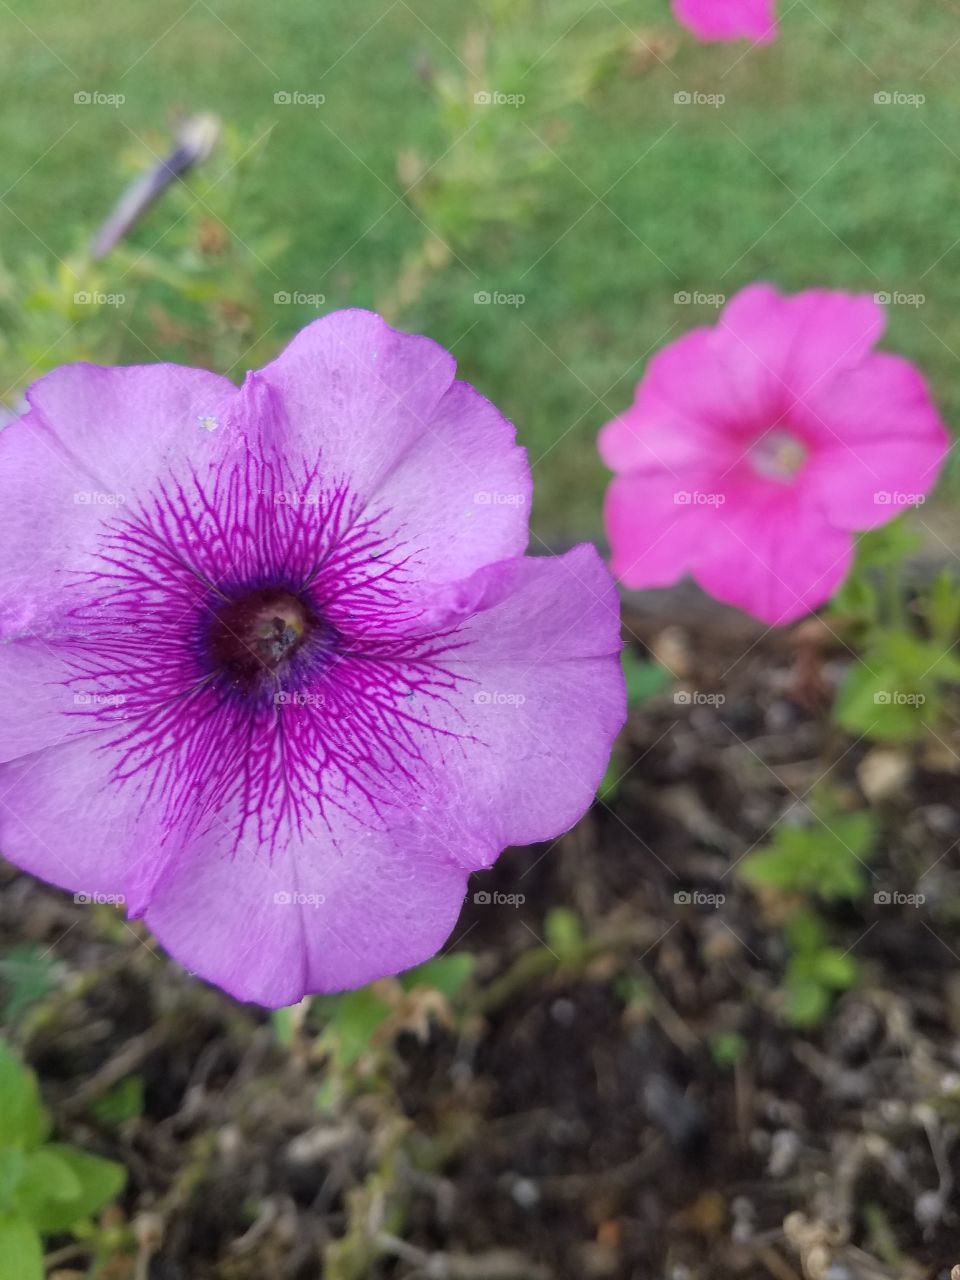 flower one purple one pink